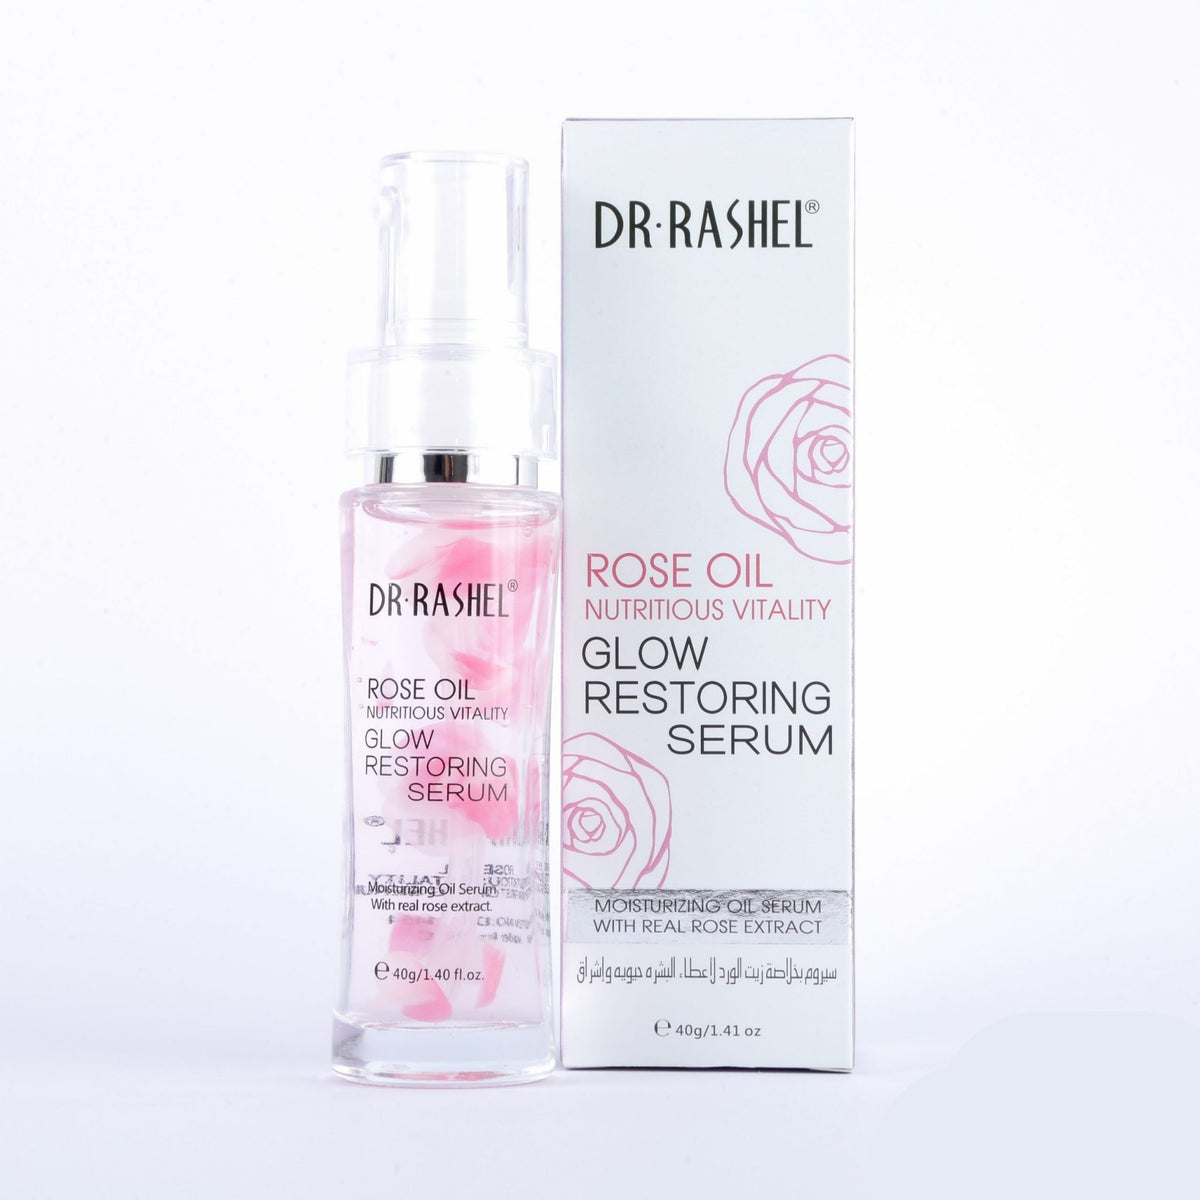 Dr Rashel Rose Oil Nutritious Vitality Glow Restoring Serum 40g freeshipping - lasertag.pk